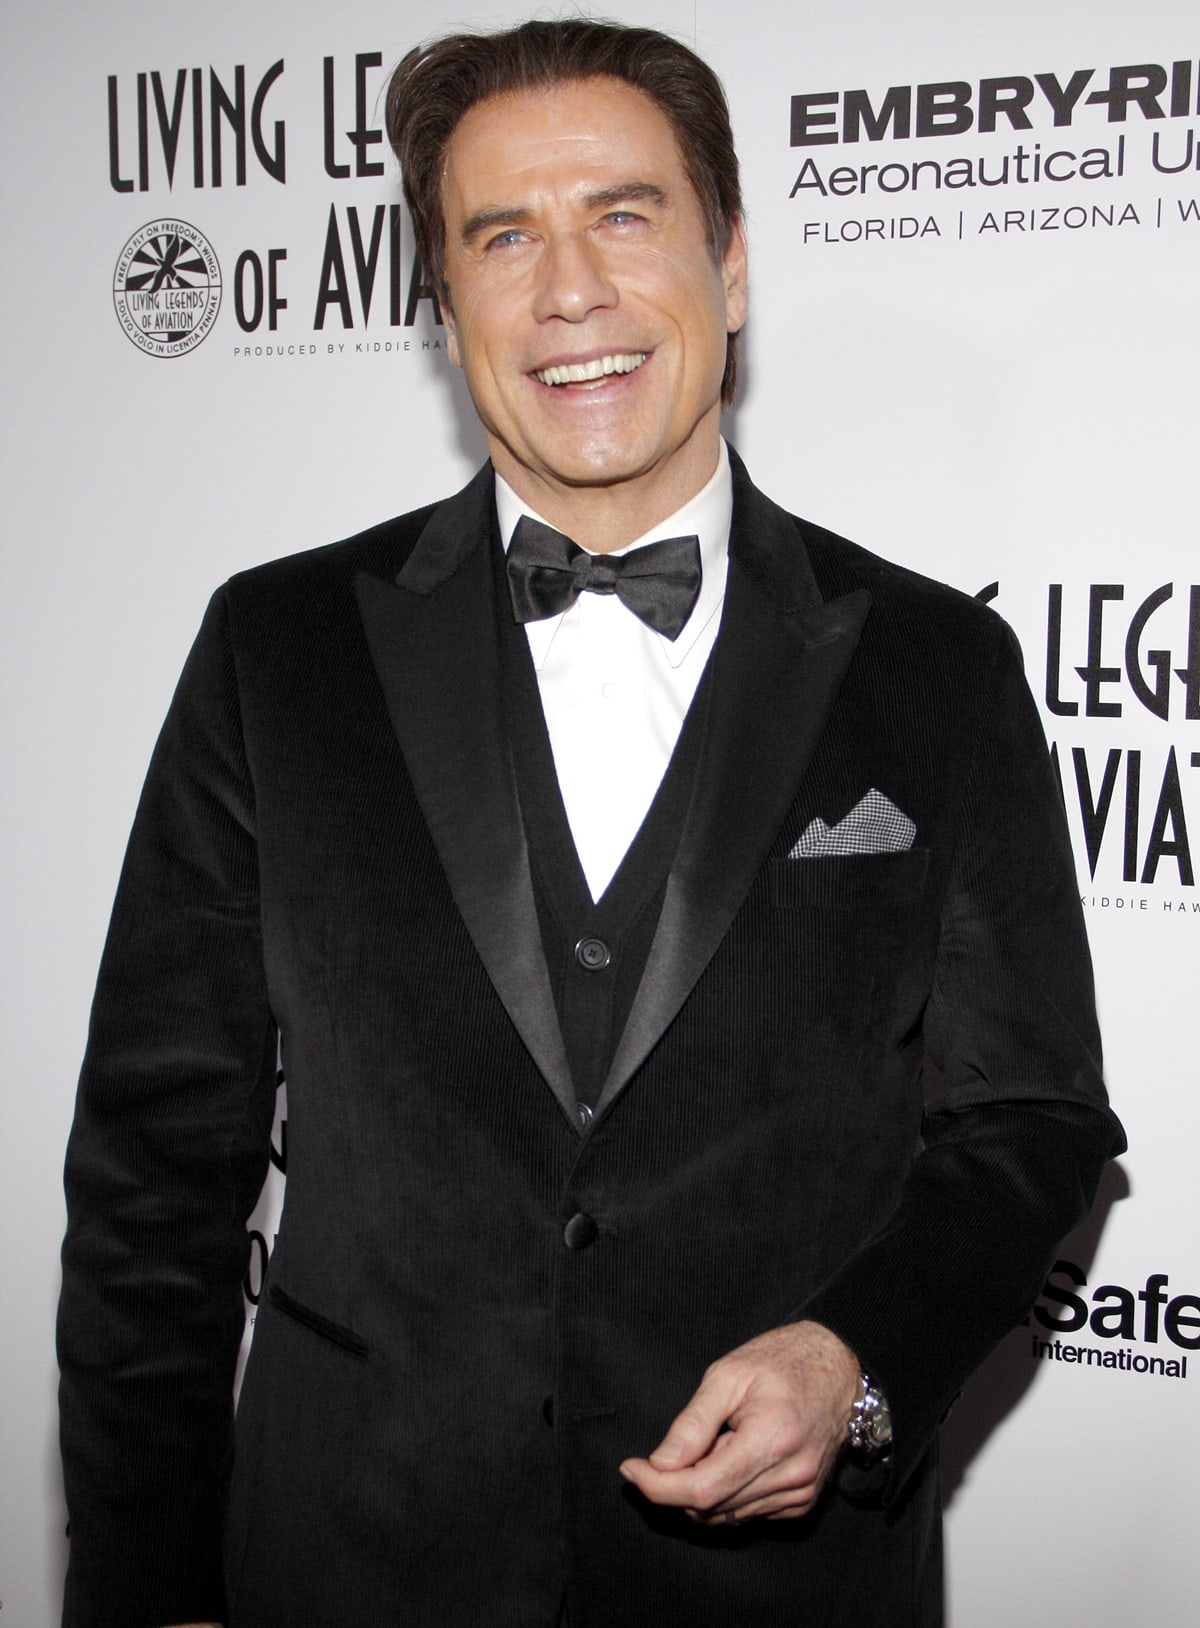 John Travolta attending the 13th Annual Living Legends of Aviation Awards